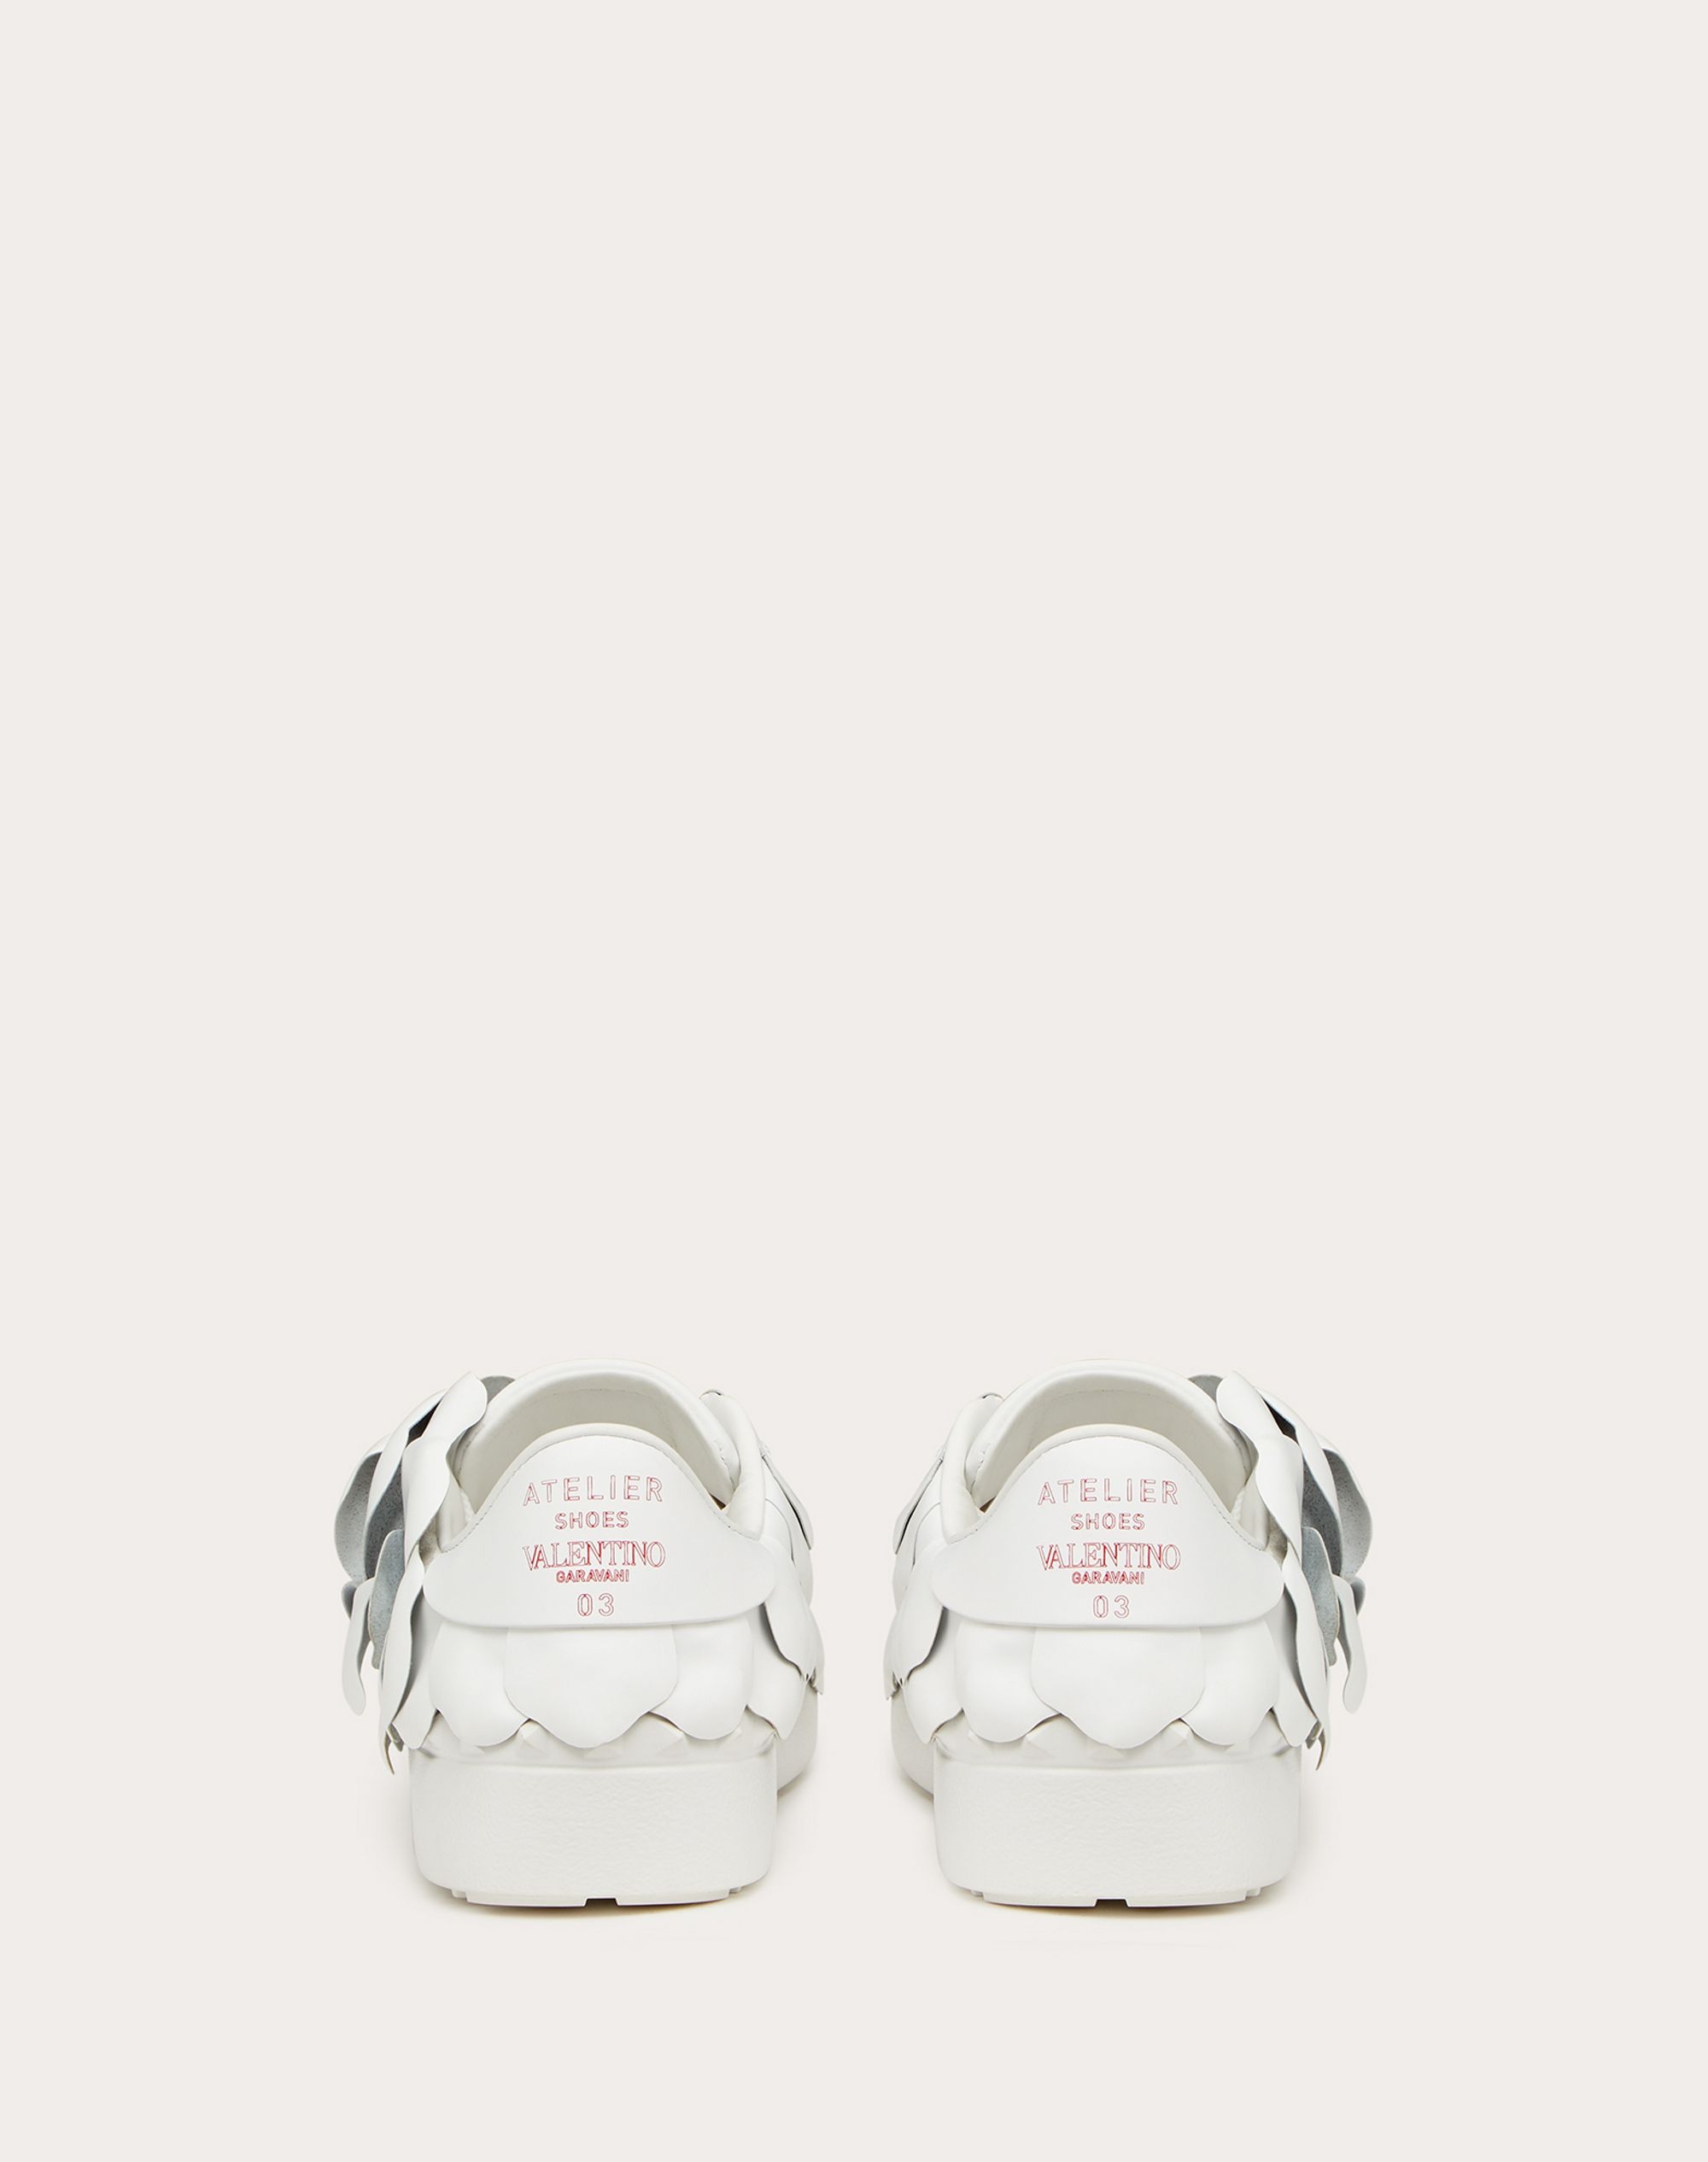 Valentino Garavani Atelier Shoes 03 Rose Edition Sneaker - 3